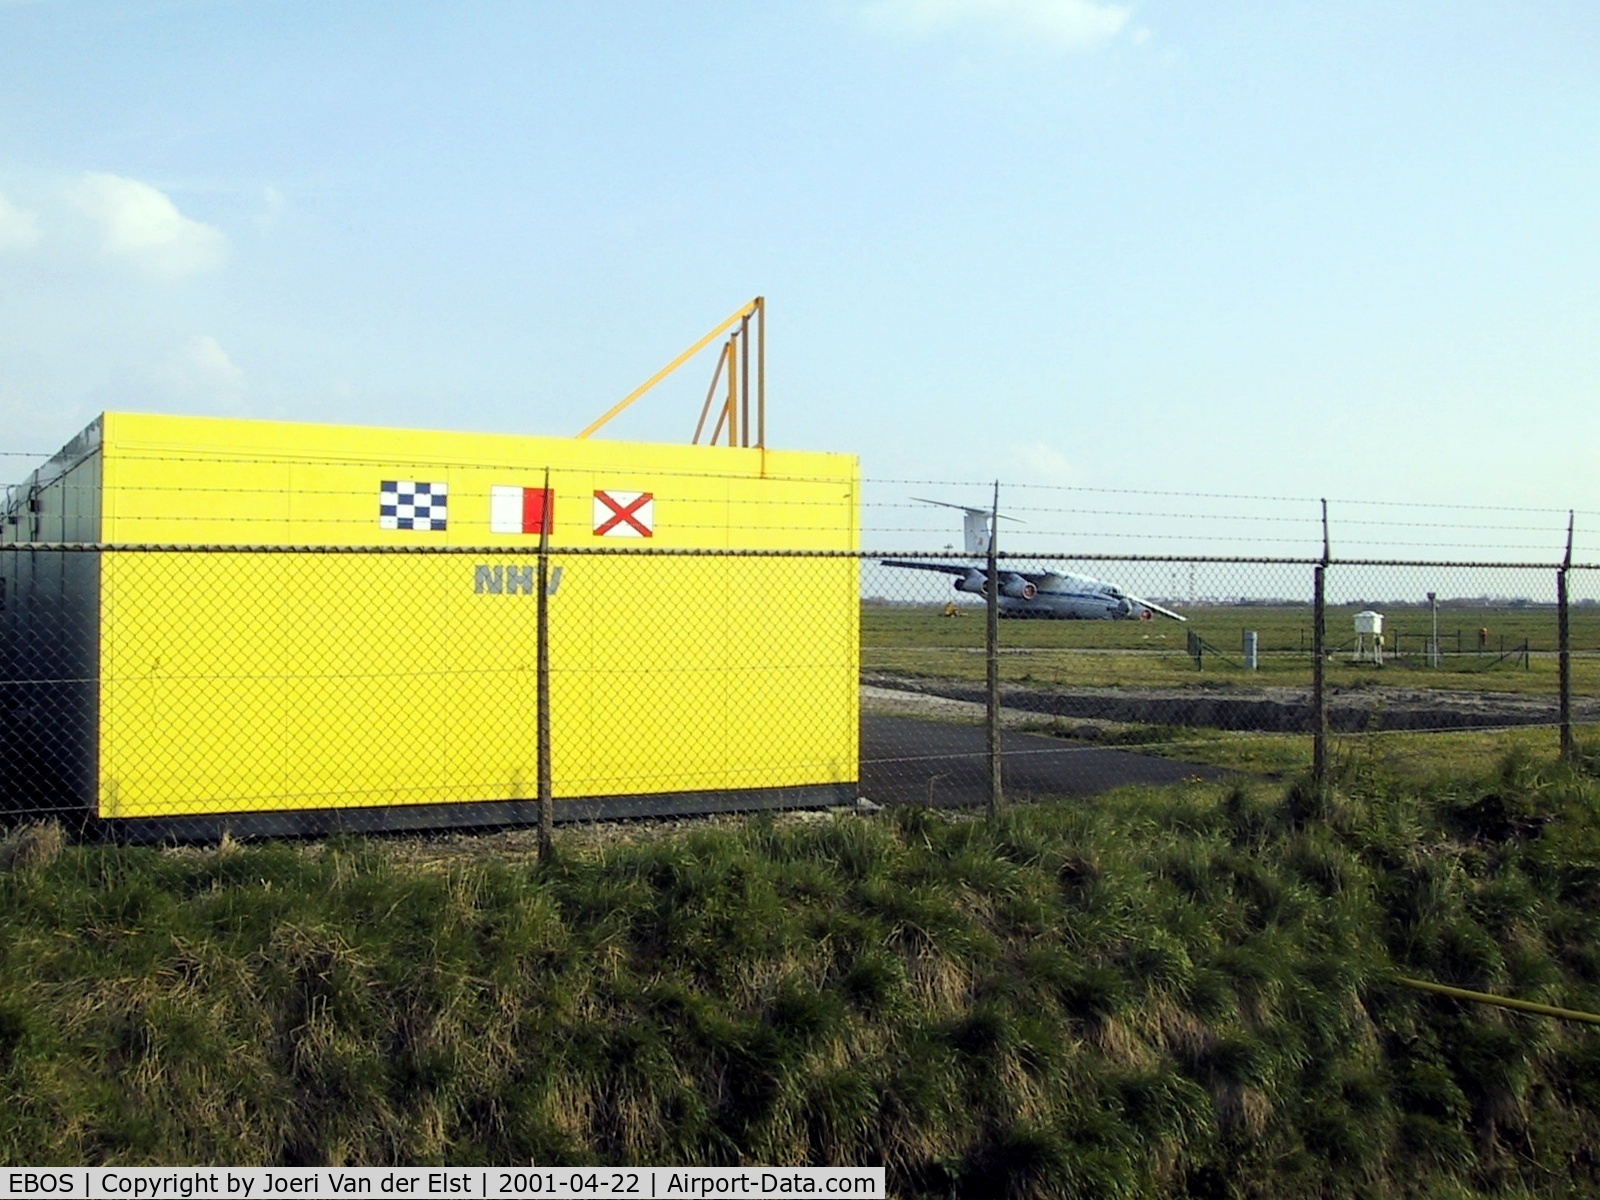 Ostend-Bruges International Airport, Ostend Belgium (EBOS) - Original office Noordzee helikopters Vlaanderen. 
Ilyushin UR-78821 landed without nosewheel and written off